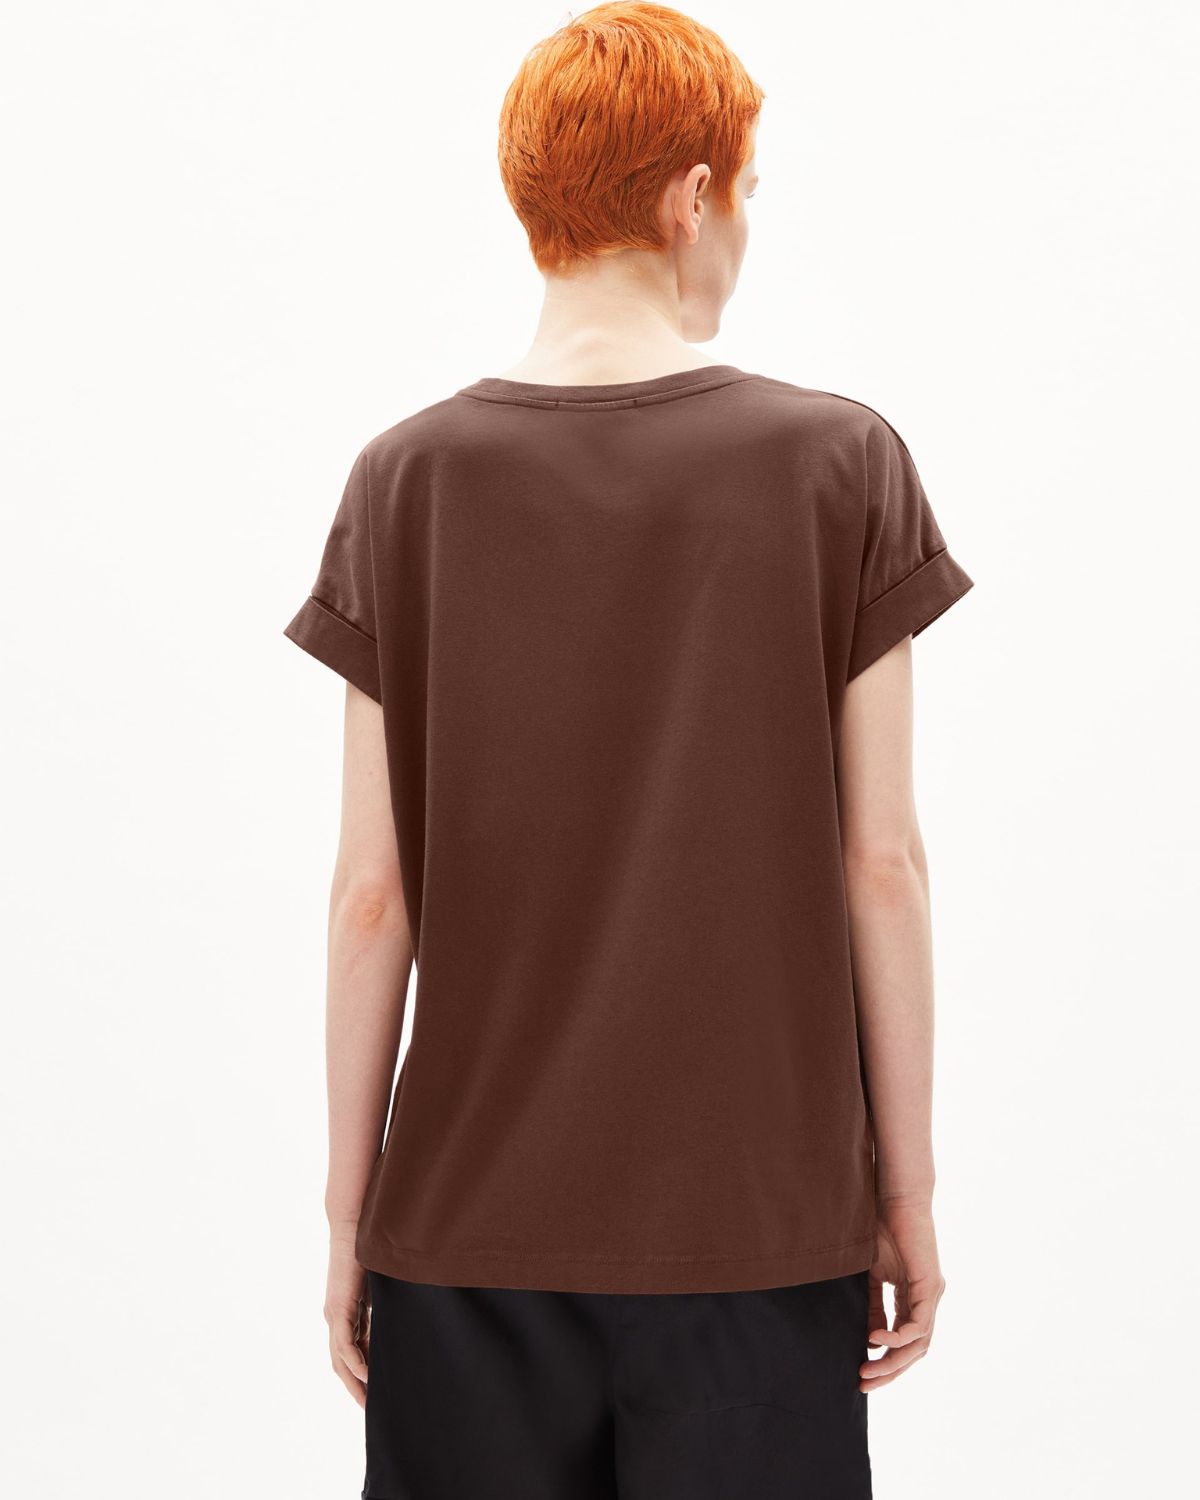 Idaara deep brown - T-Shirt Damen